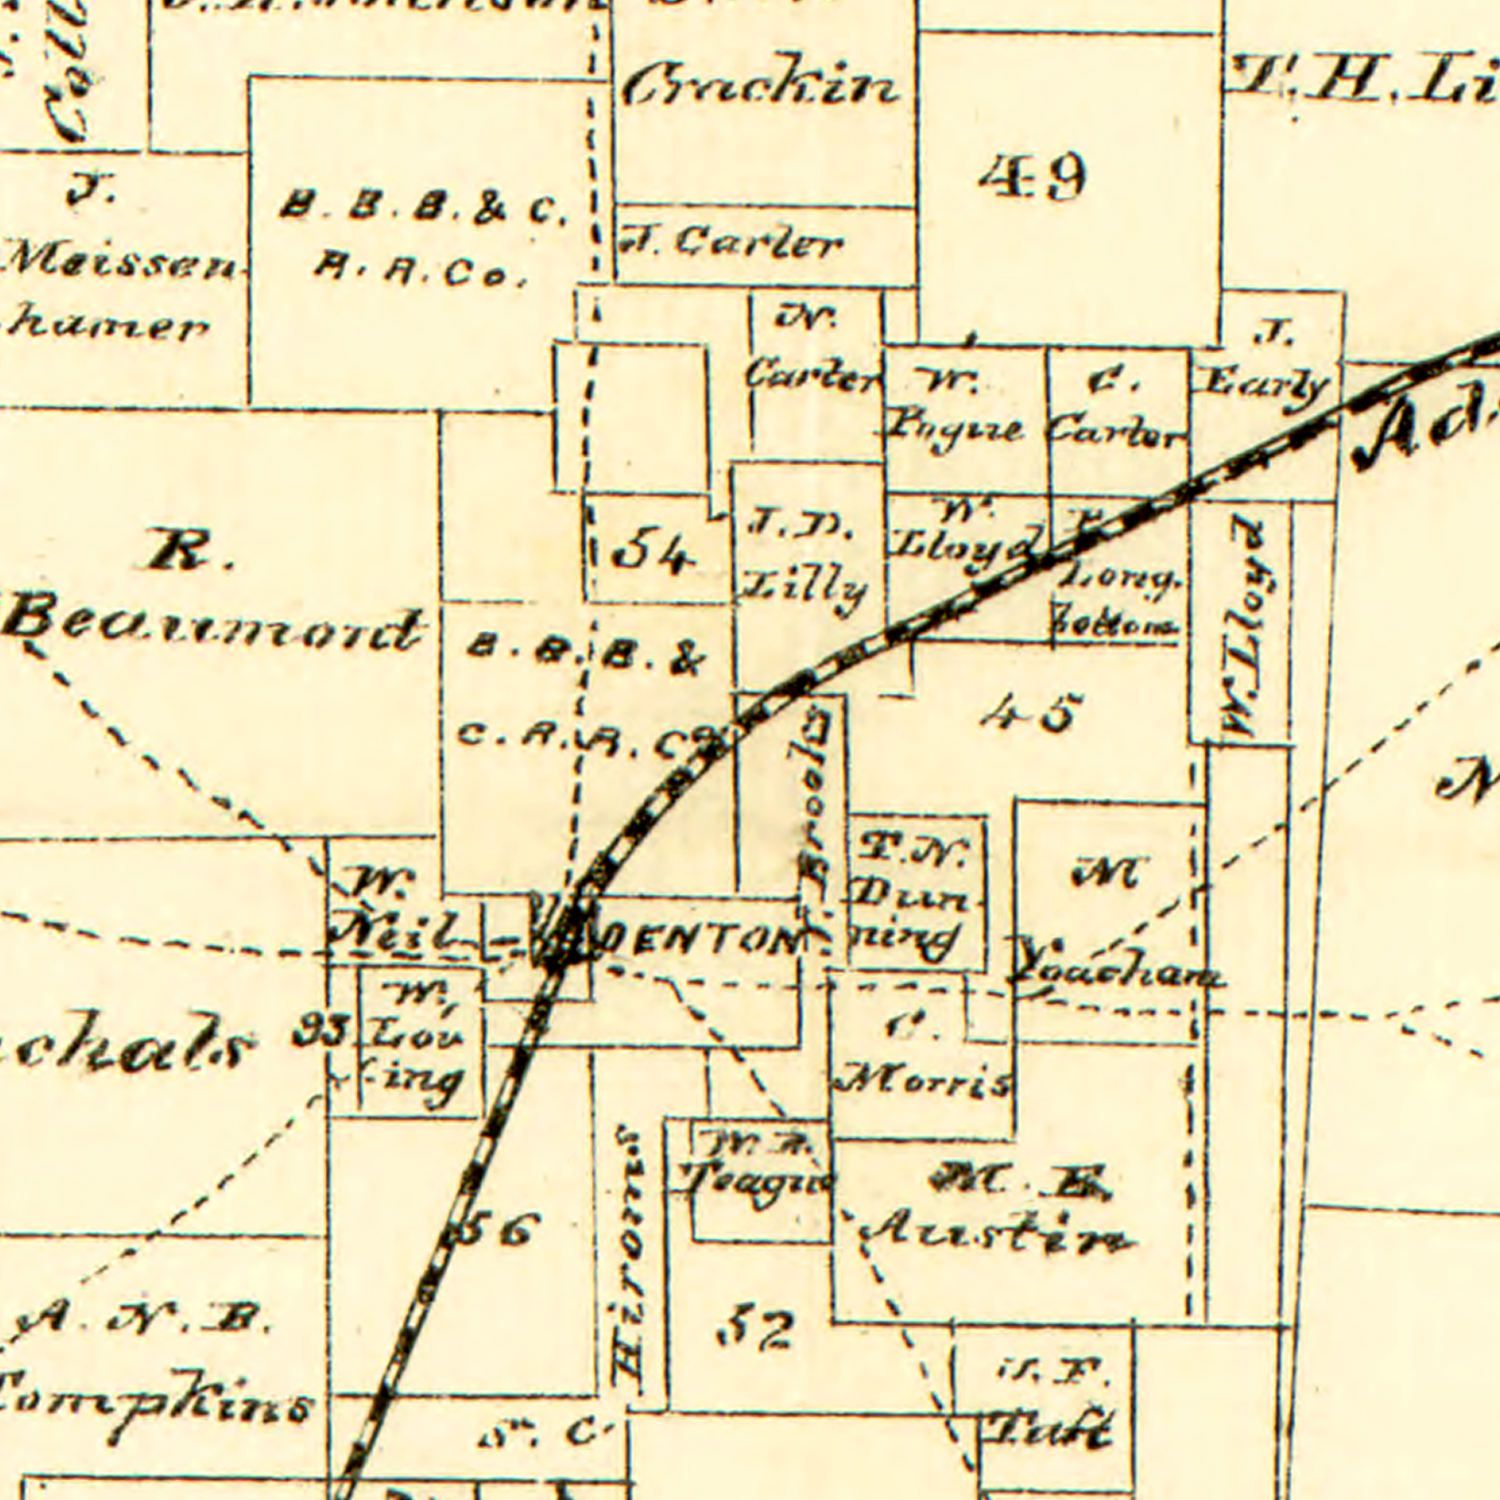 Vintage Map of Denton County, Texas 1870